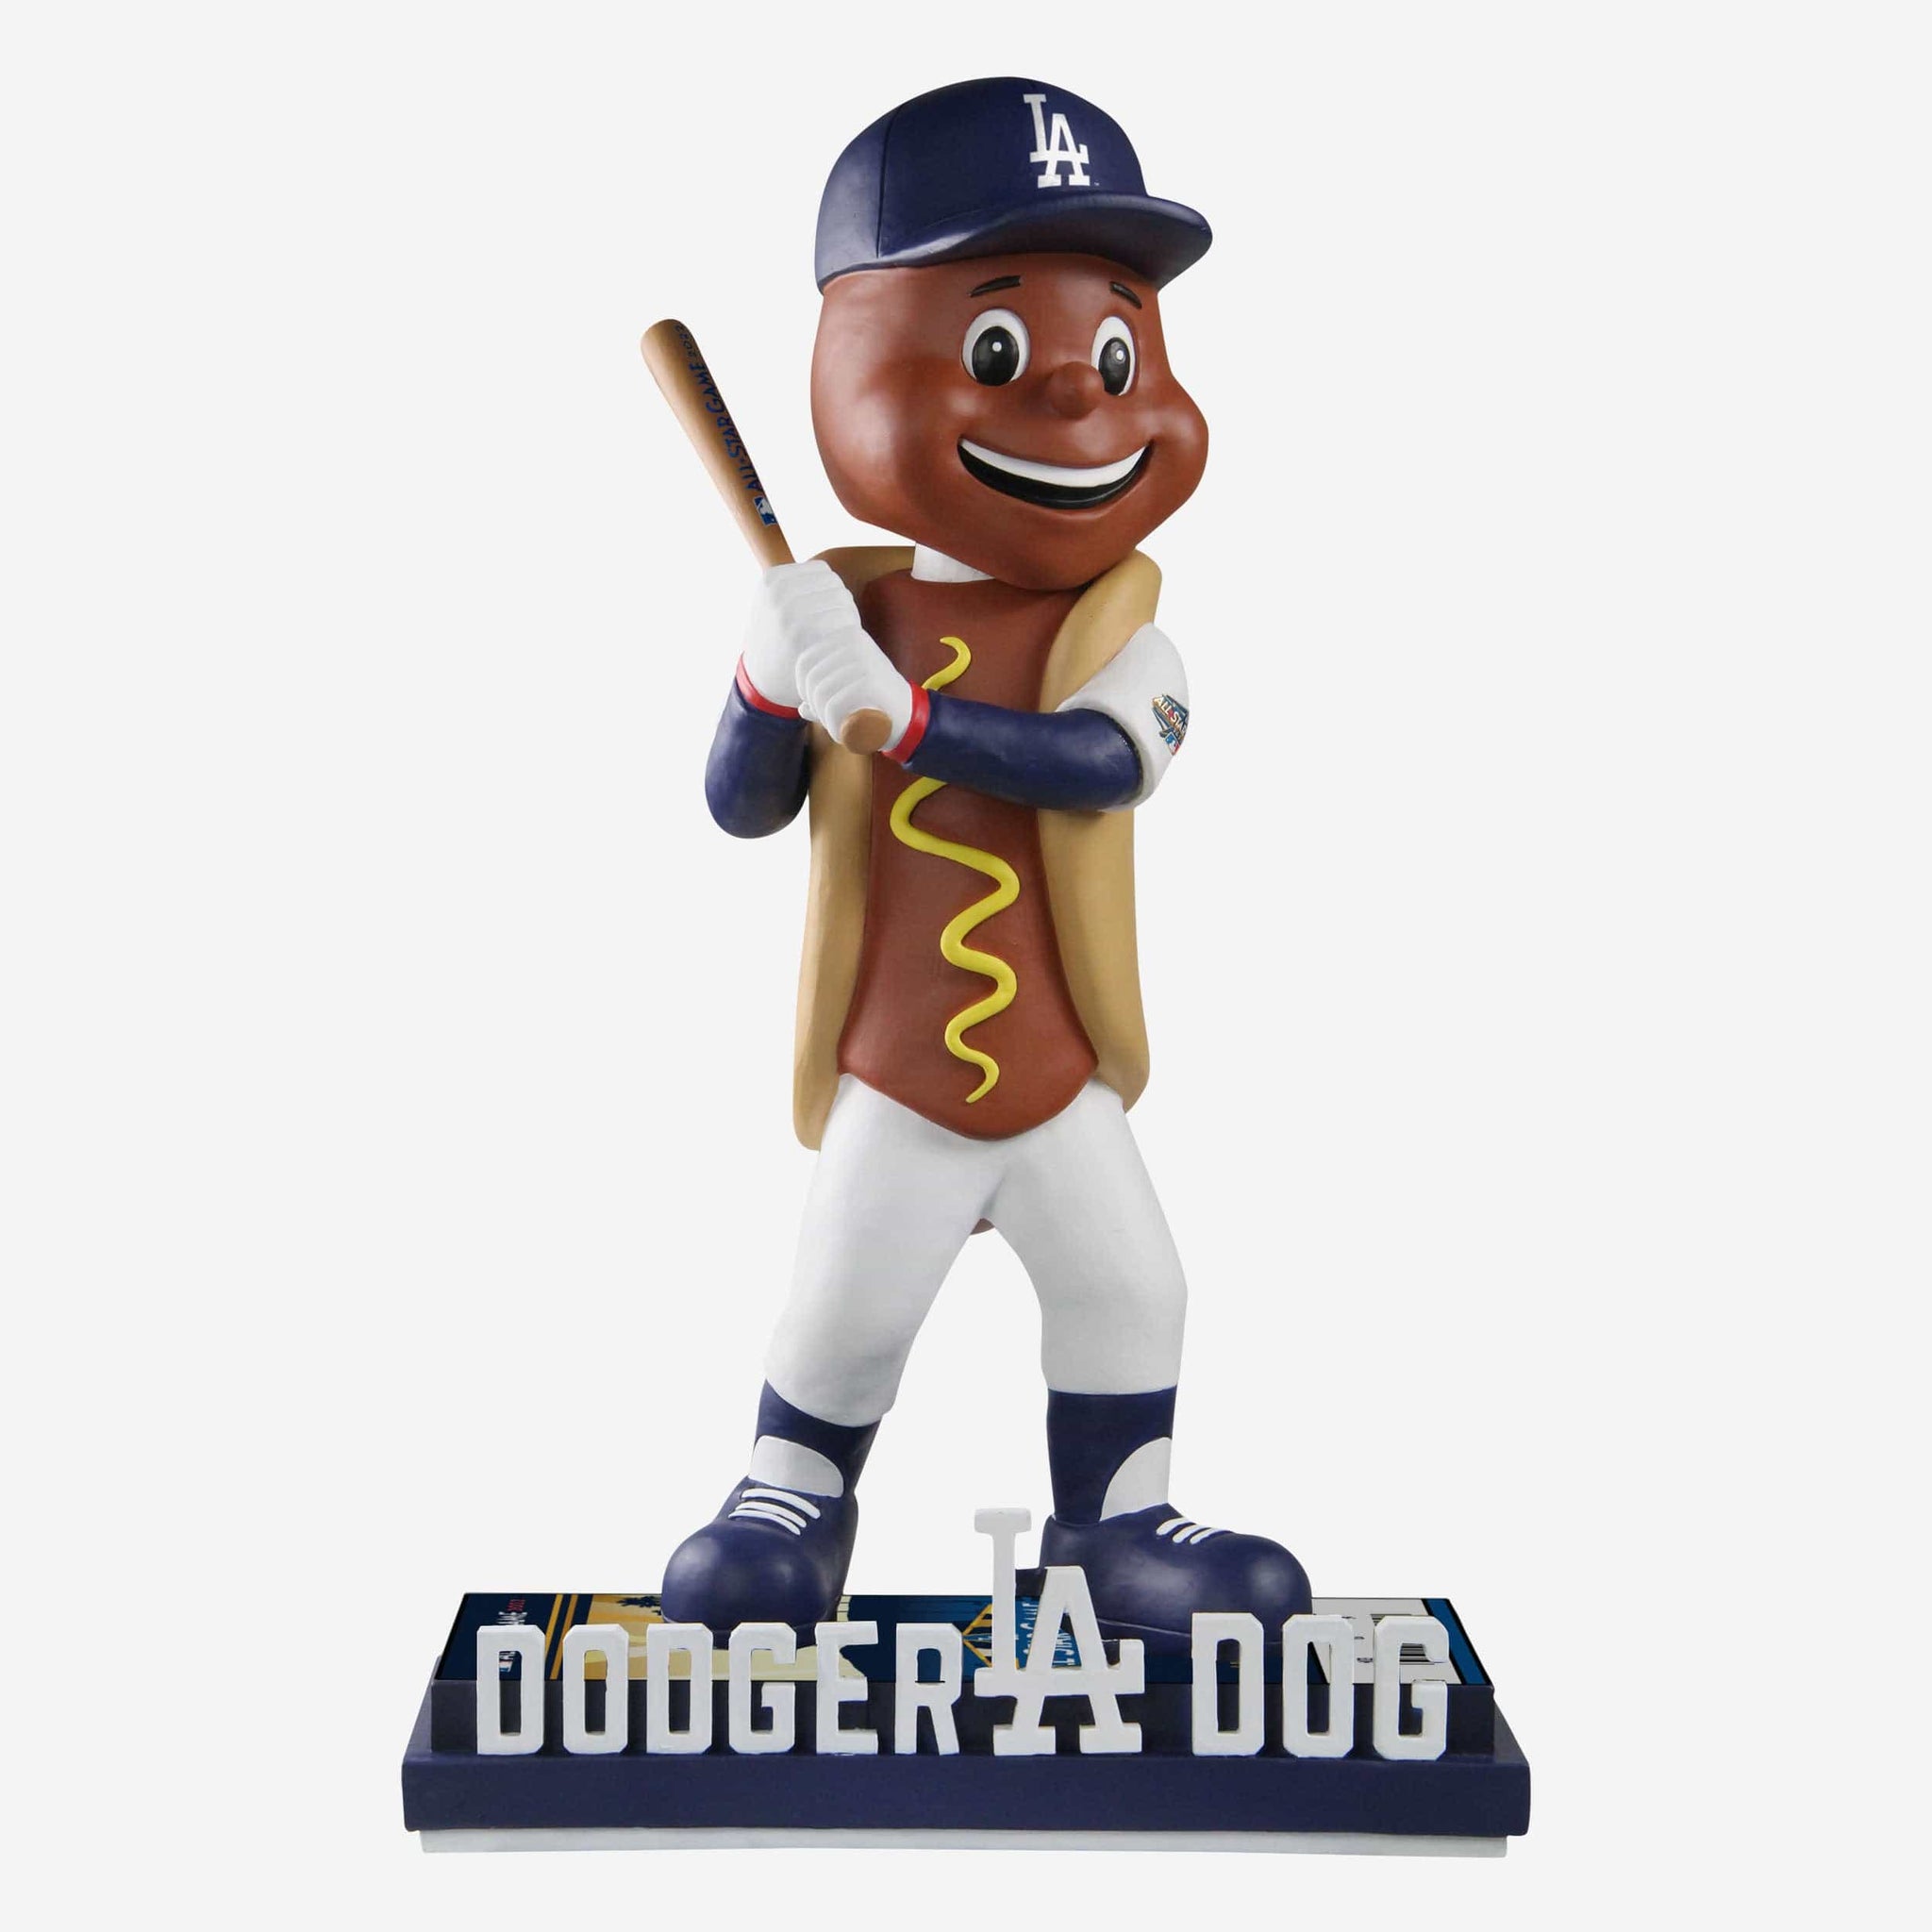 English Bulldog wearing his Dodgers uniform  Dodgers uniforms, Dodger dog,  English bulldog